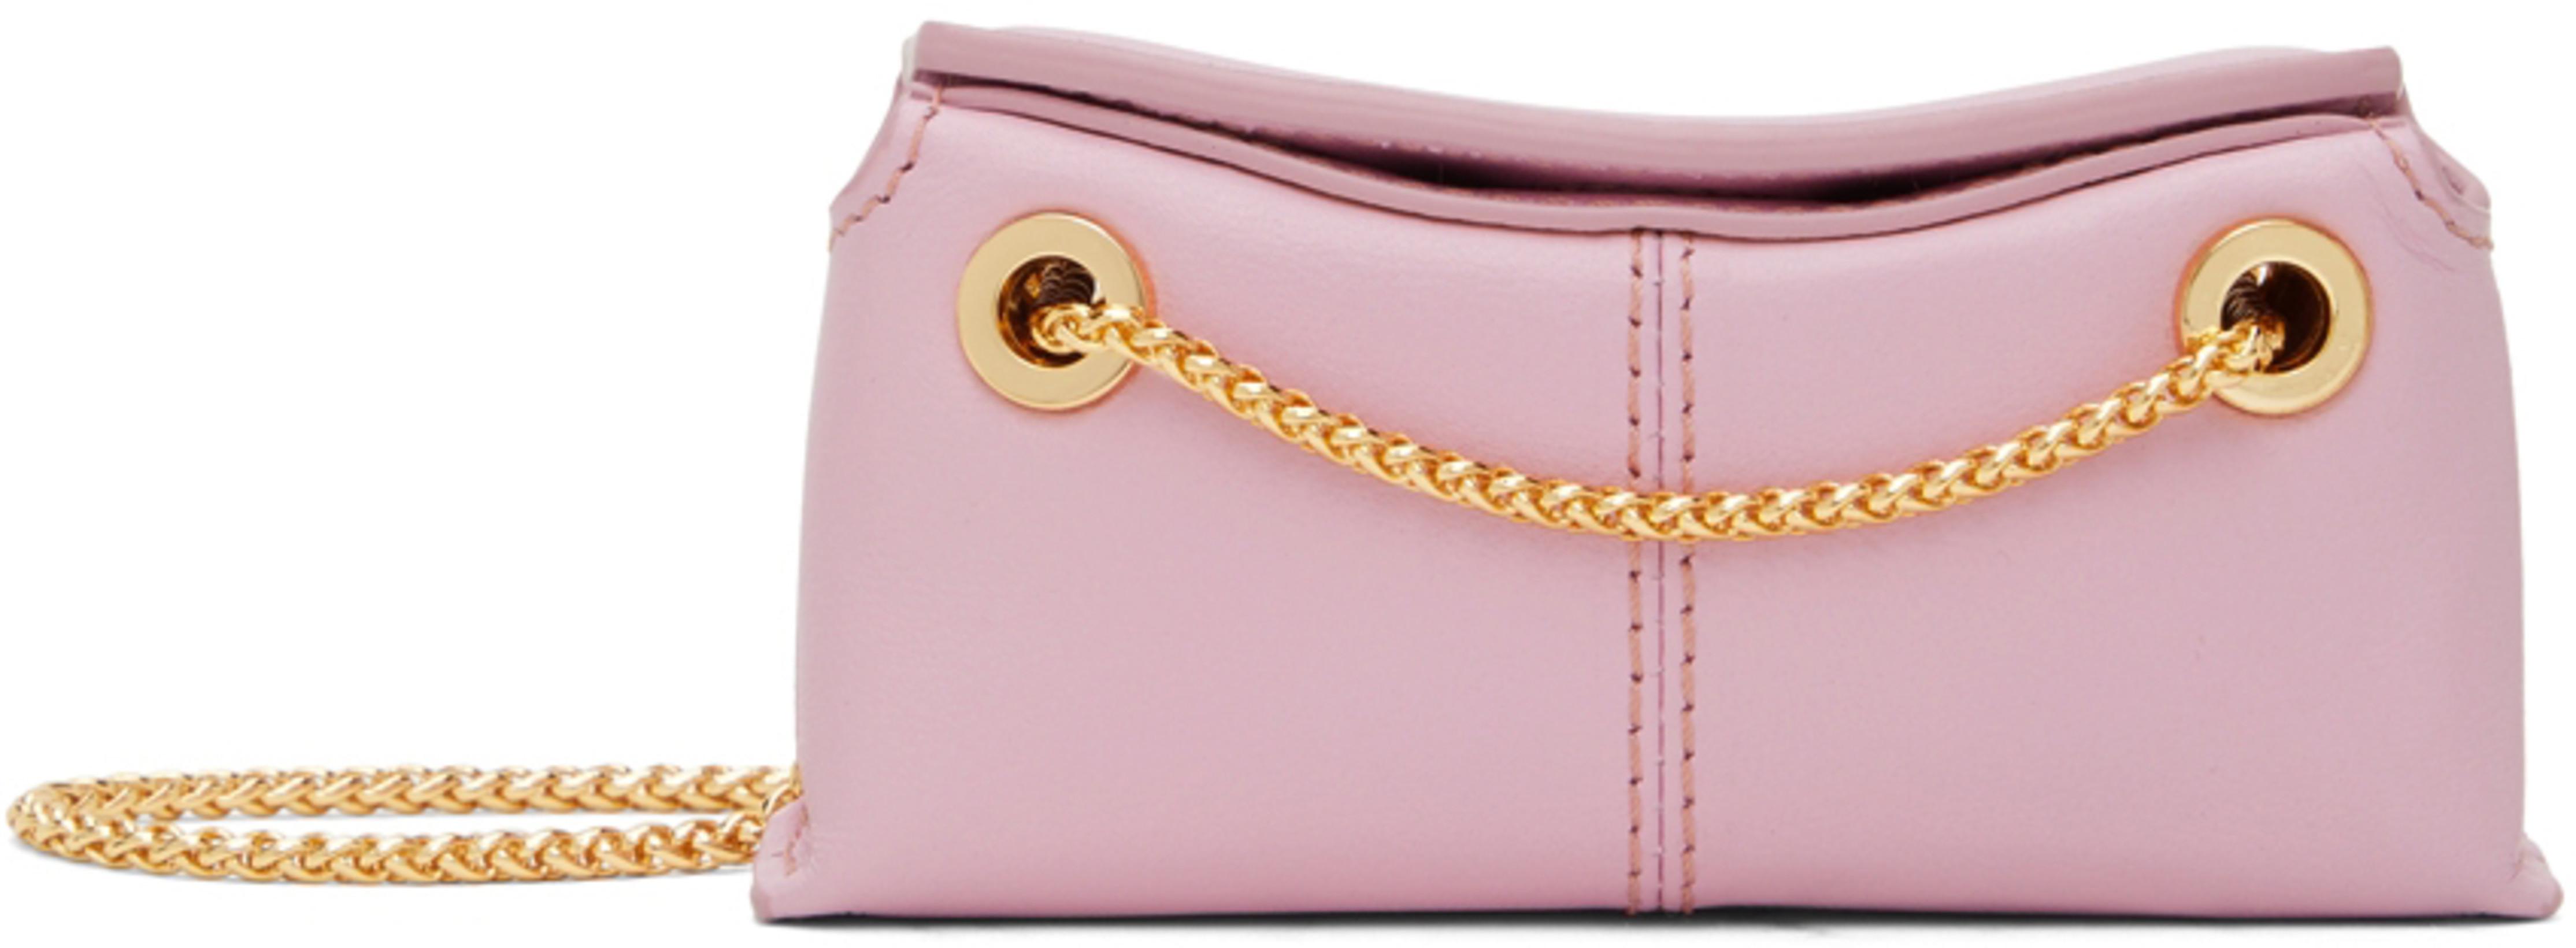 Pink The Volon Edition Leather Mini Shoulder Bag by BONBOM